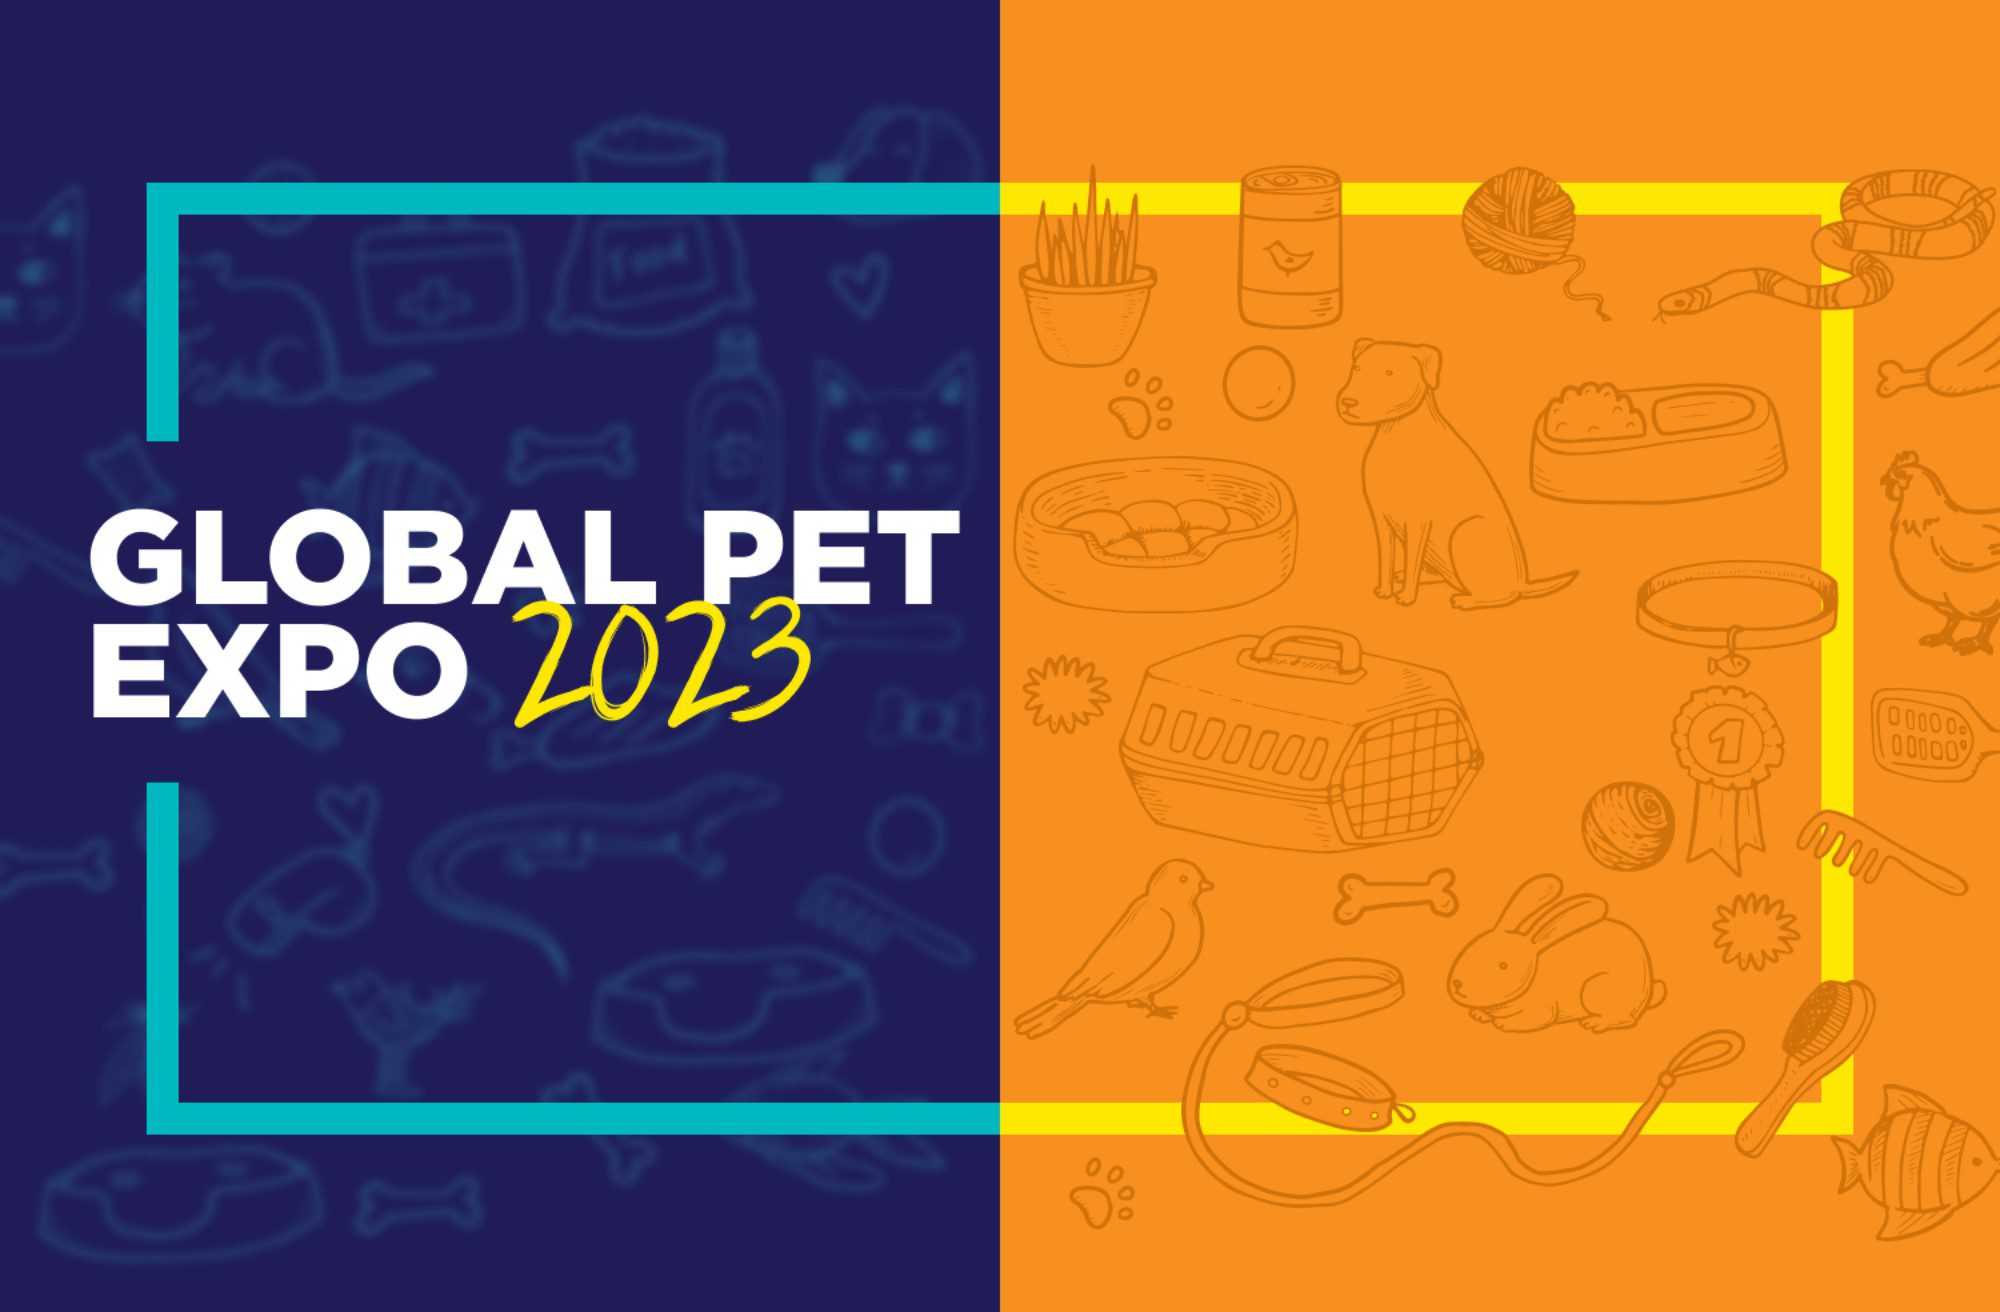 Global Pet Expo 2023 (Photo: globalpetexpo.org/)